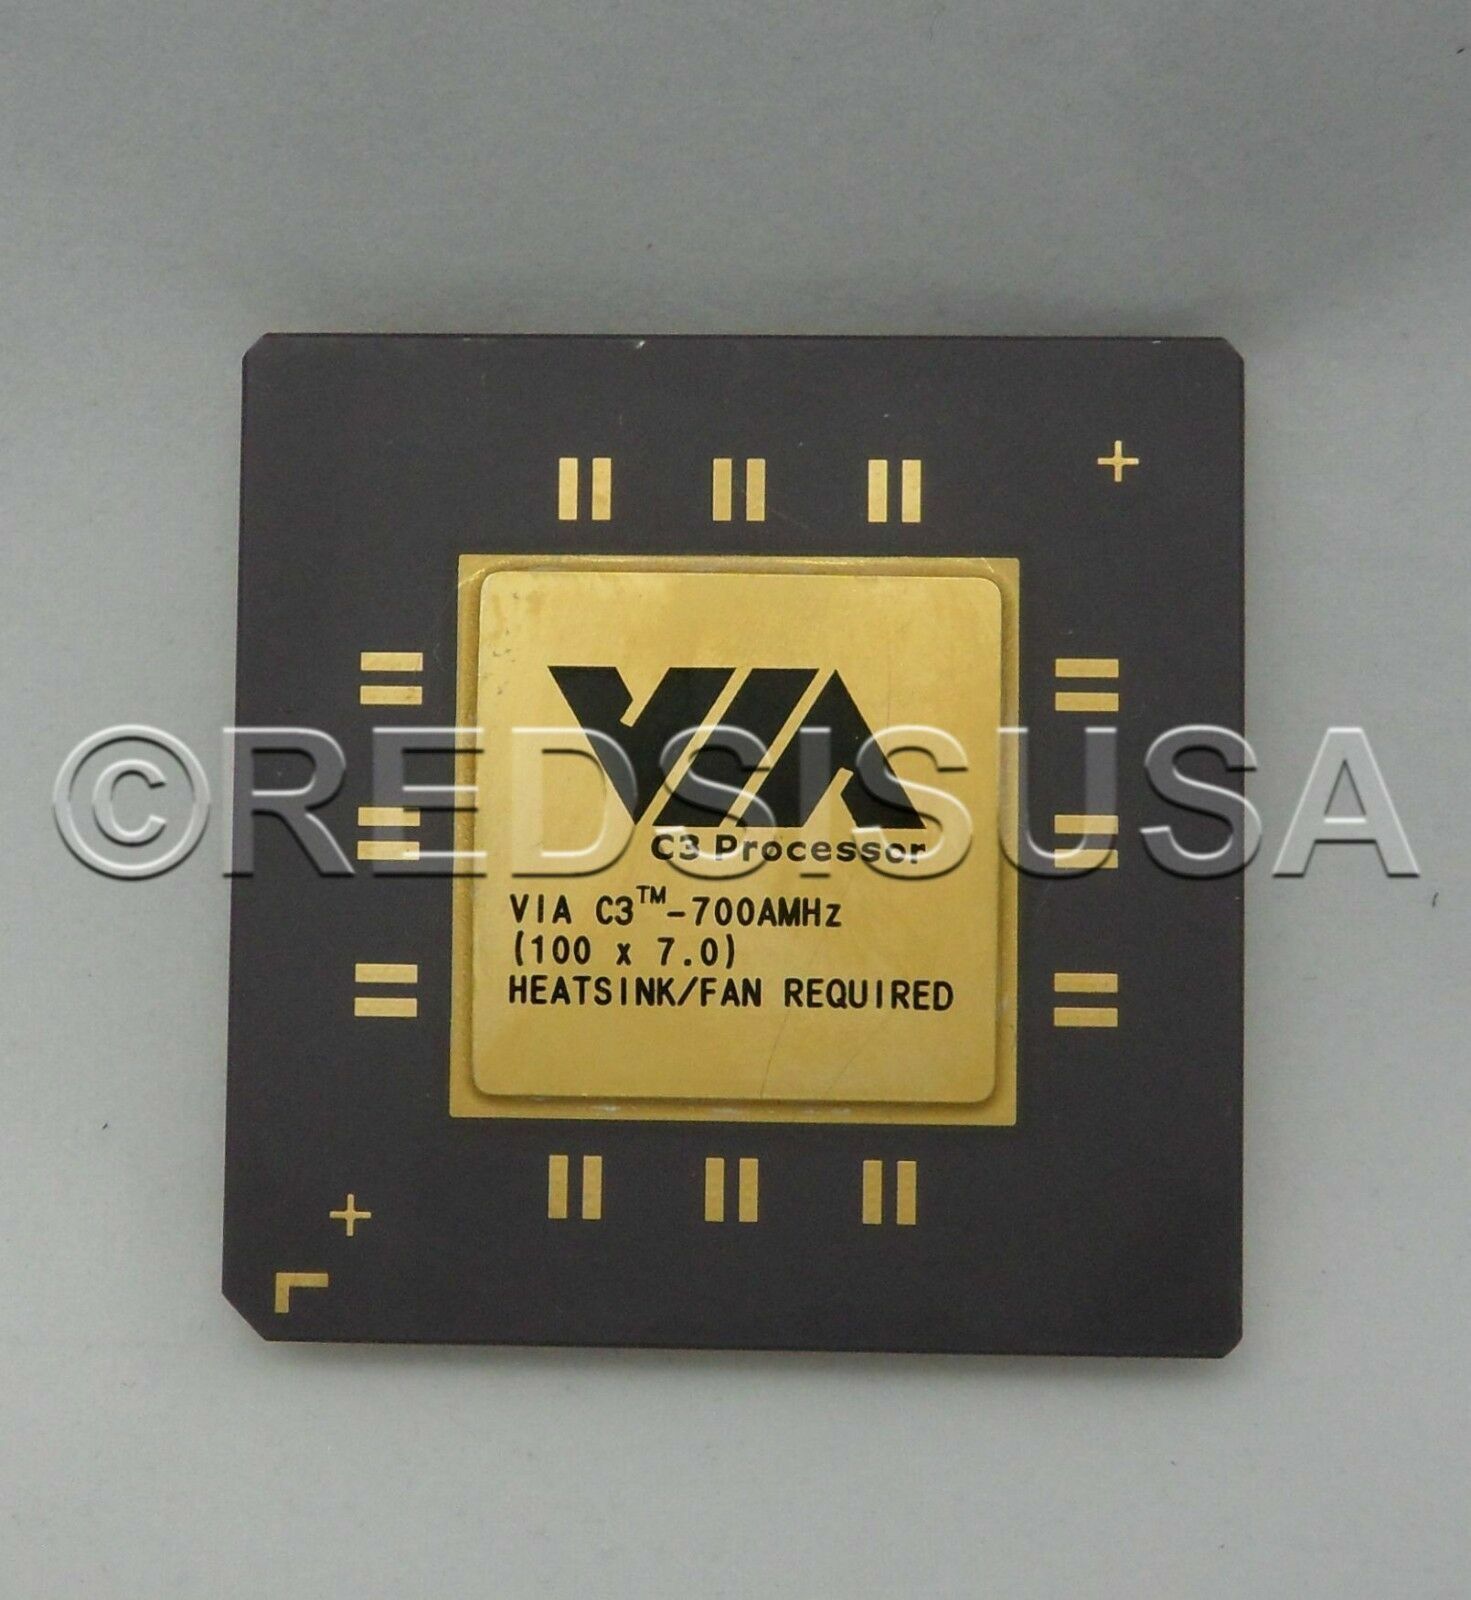 VIA C3 700 MHZ Processor CYRIX III-866 Grade A VIAC3-700AMHZ